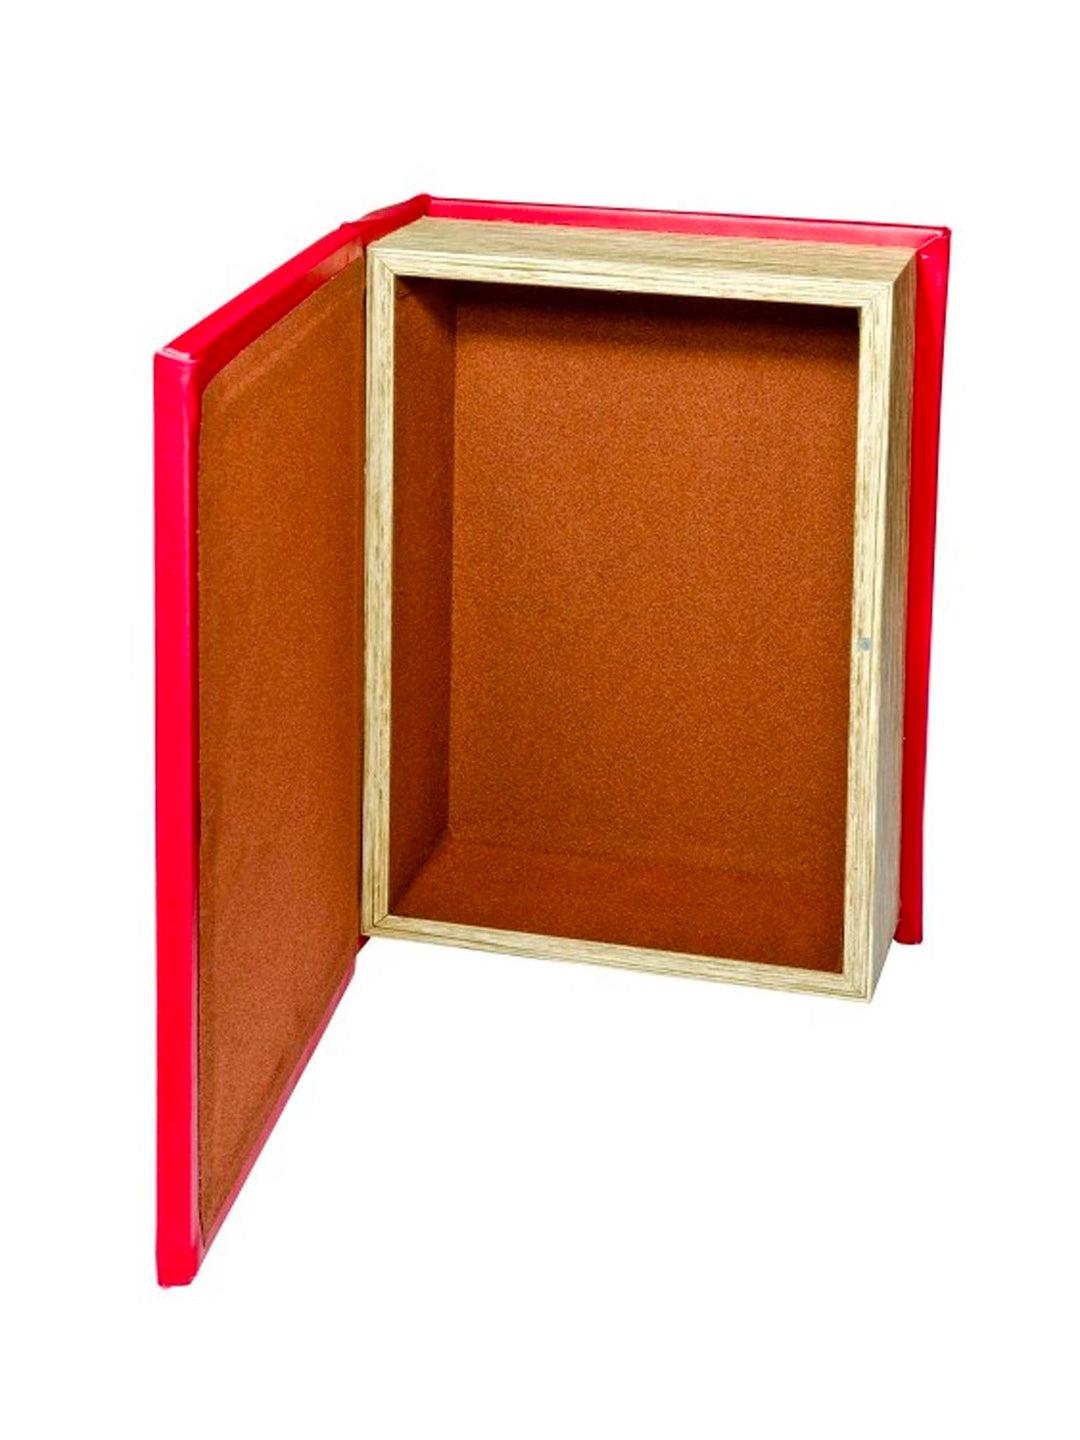 wooden storage boxes 